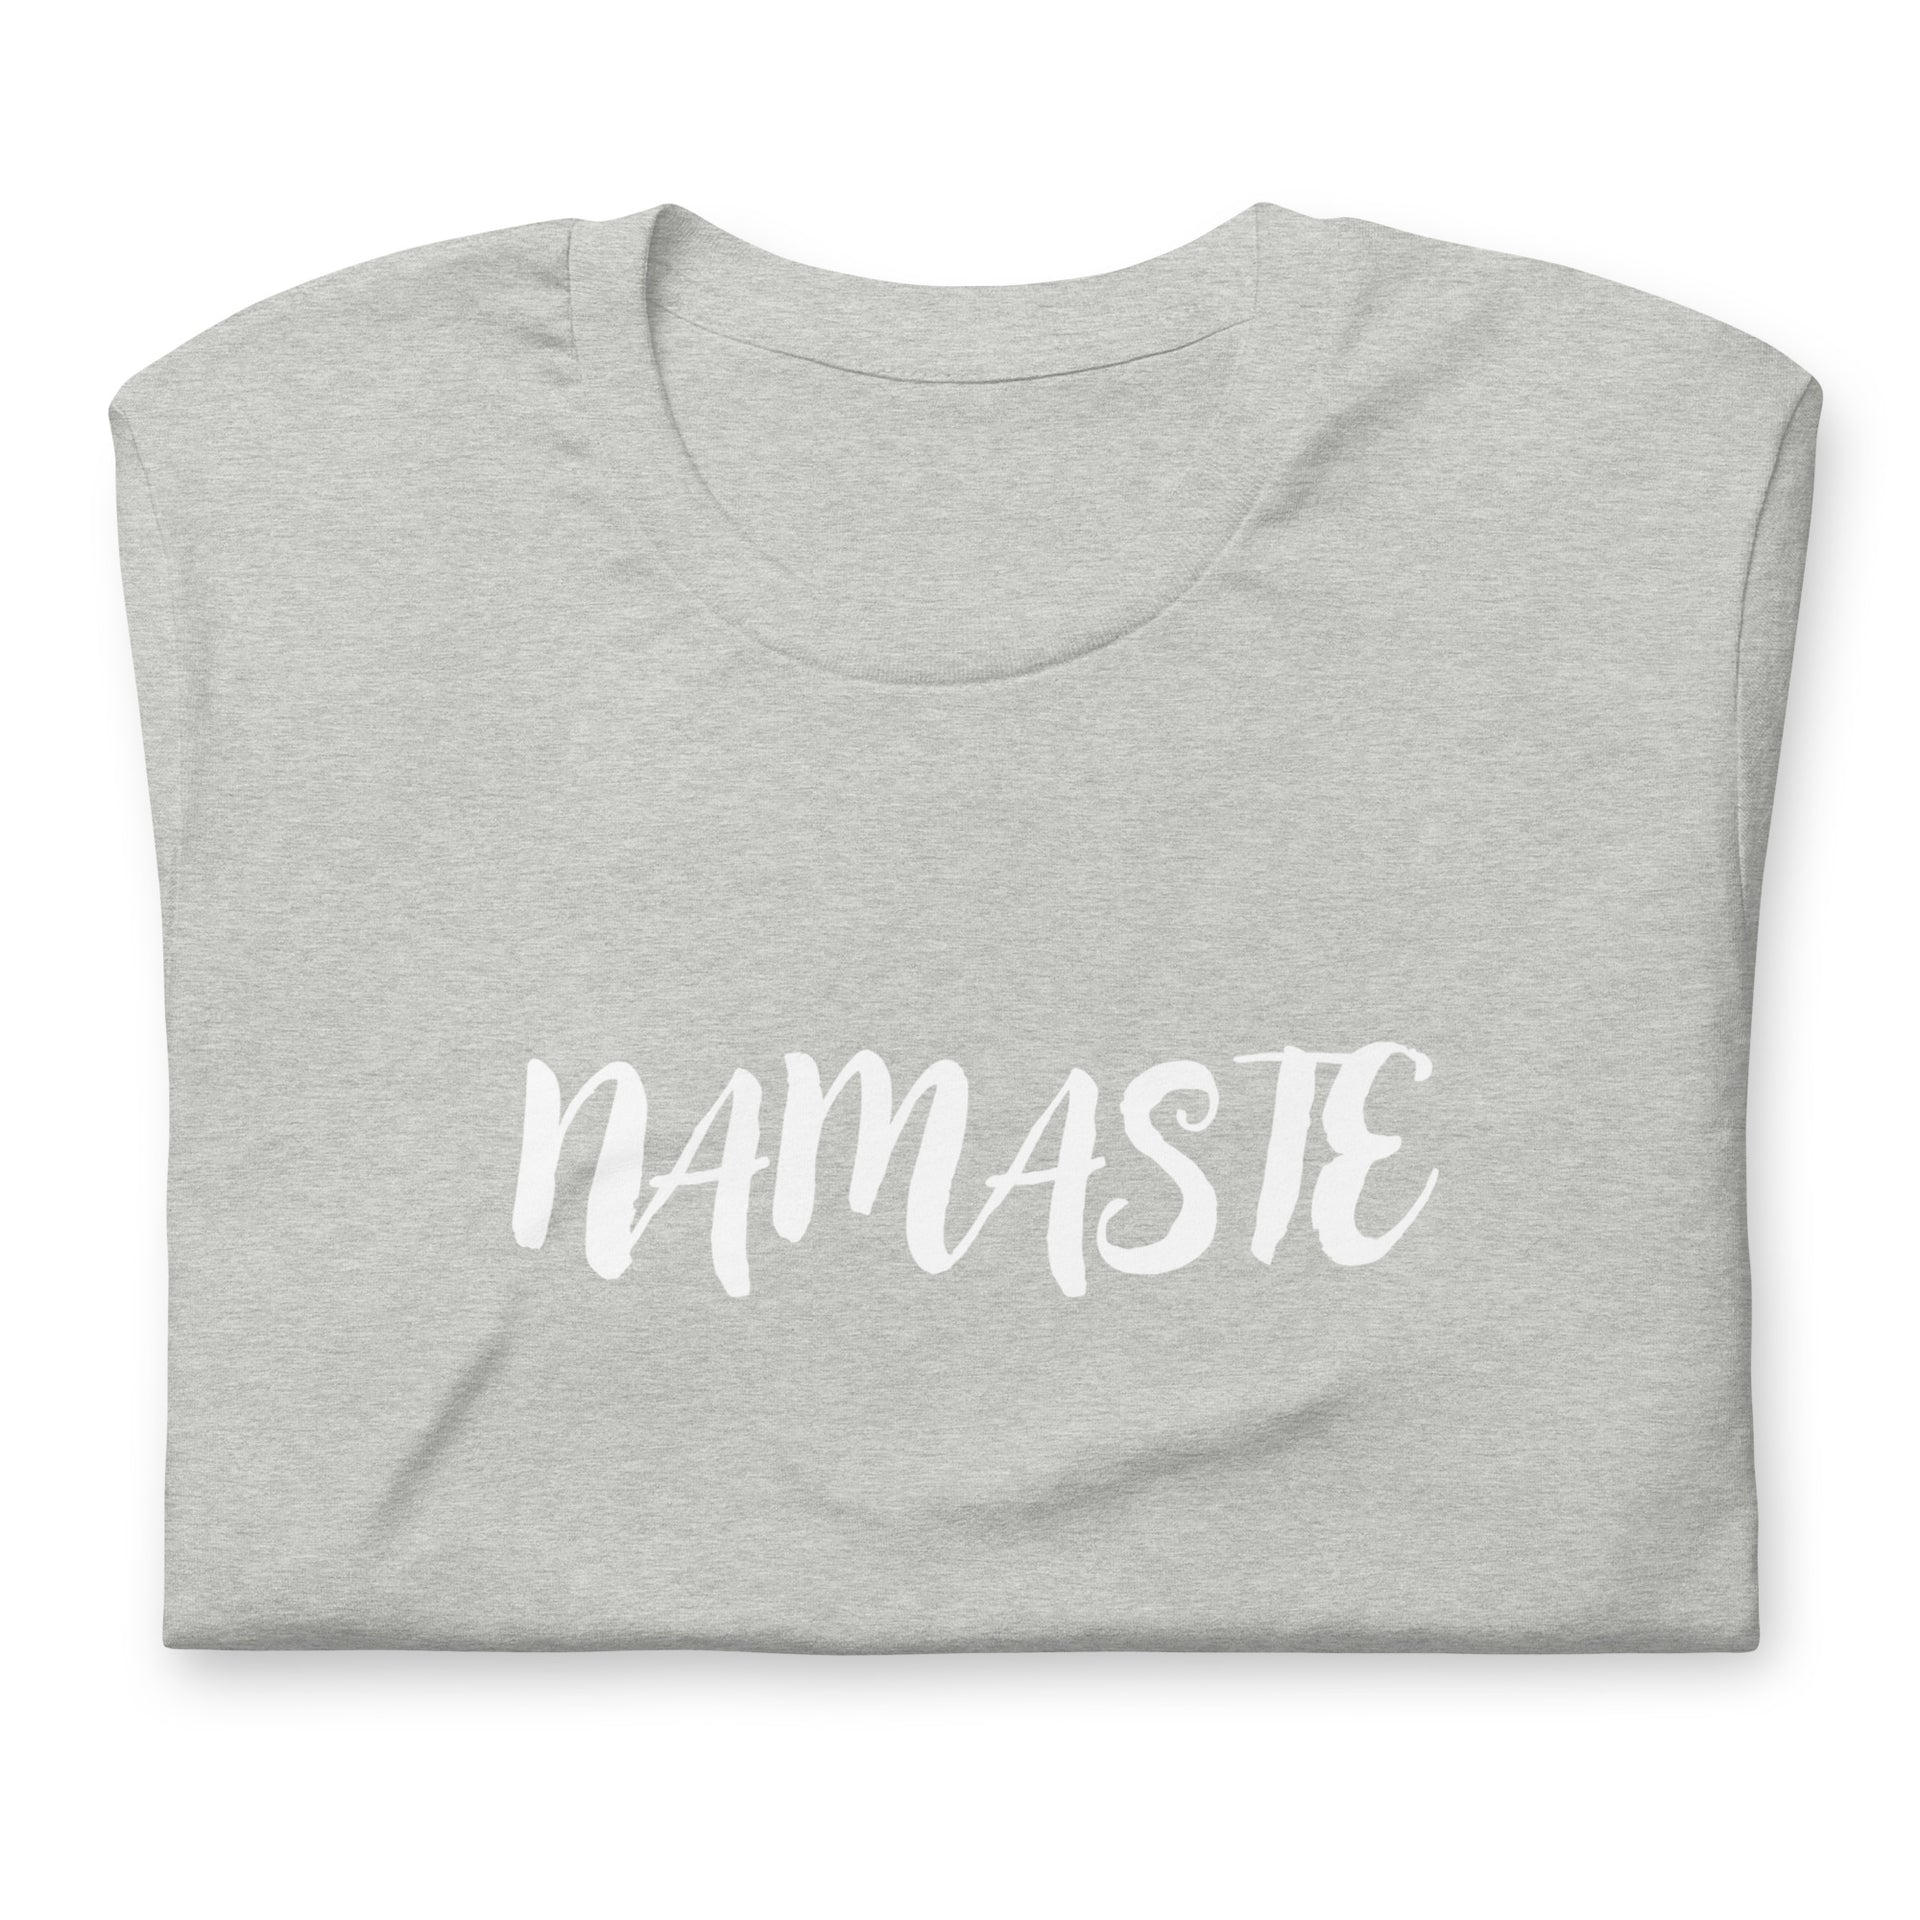 Spirituella – Namaste Yoga shirt